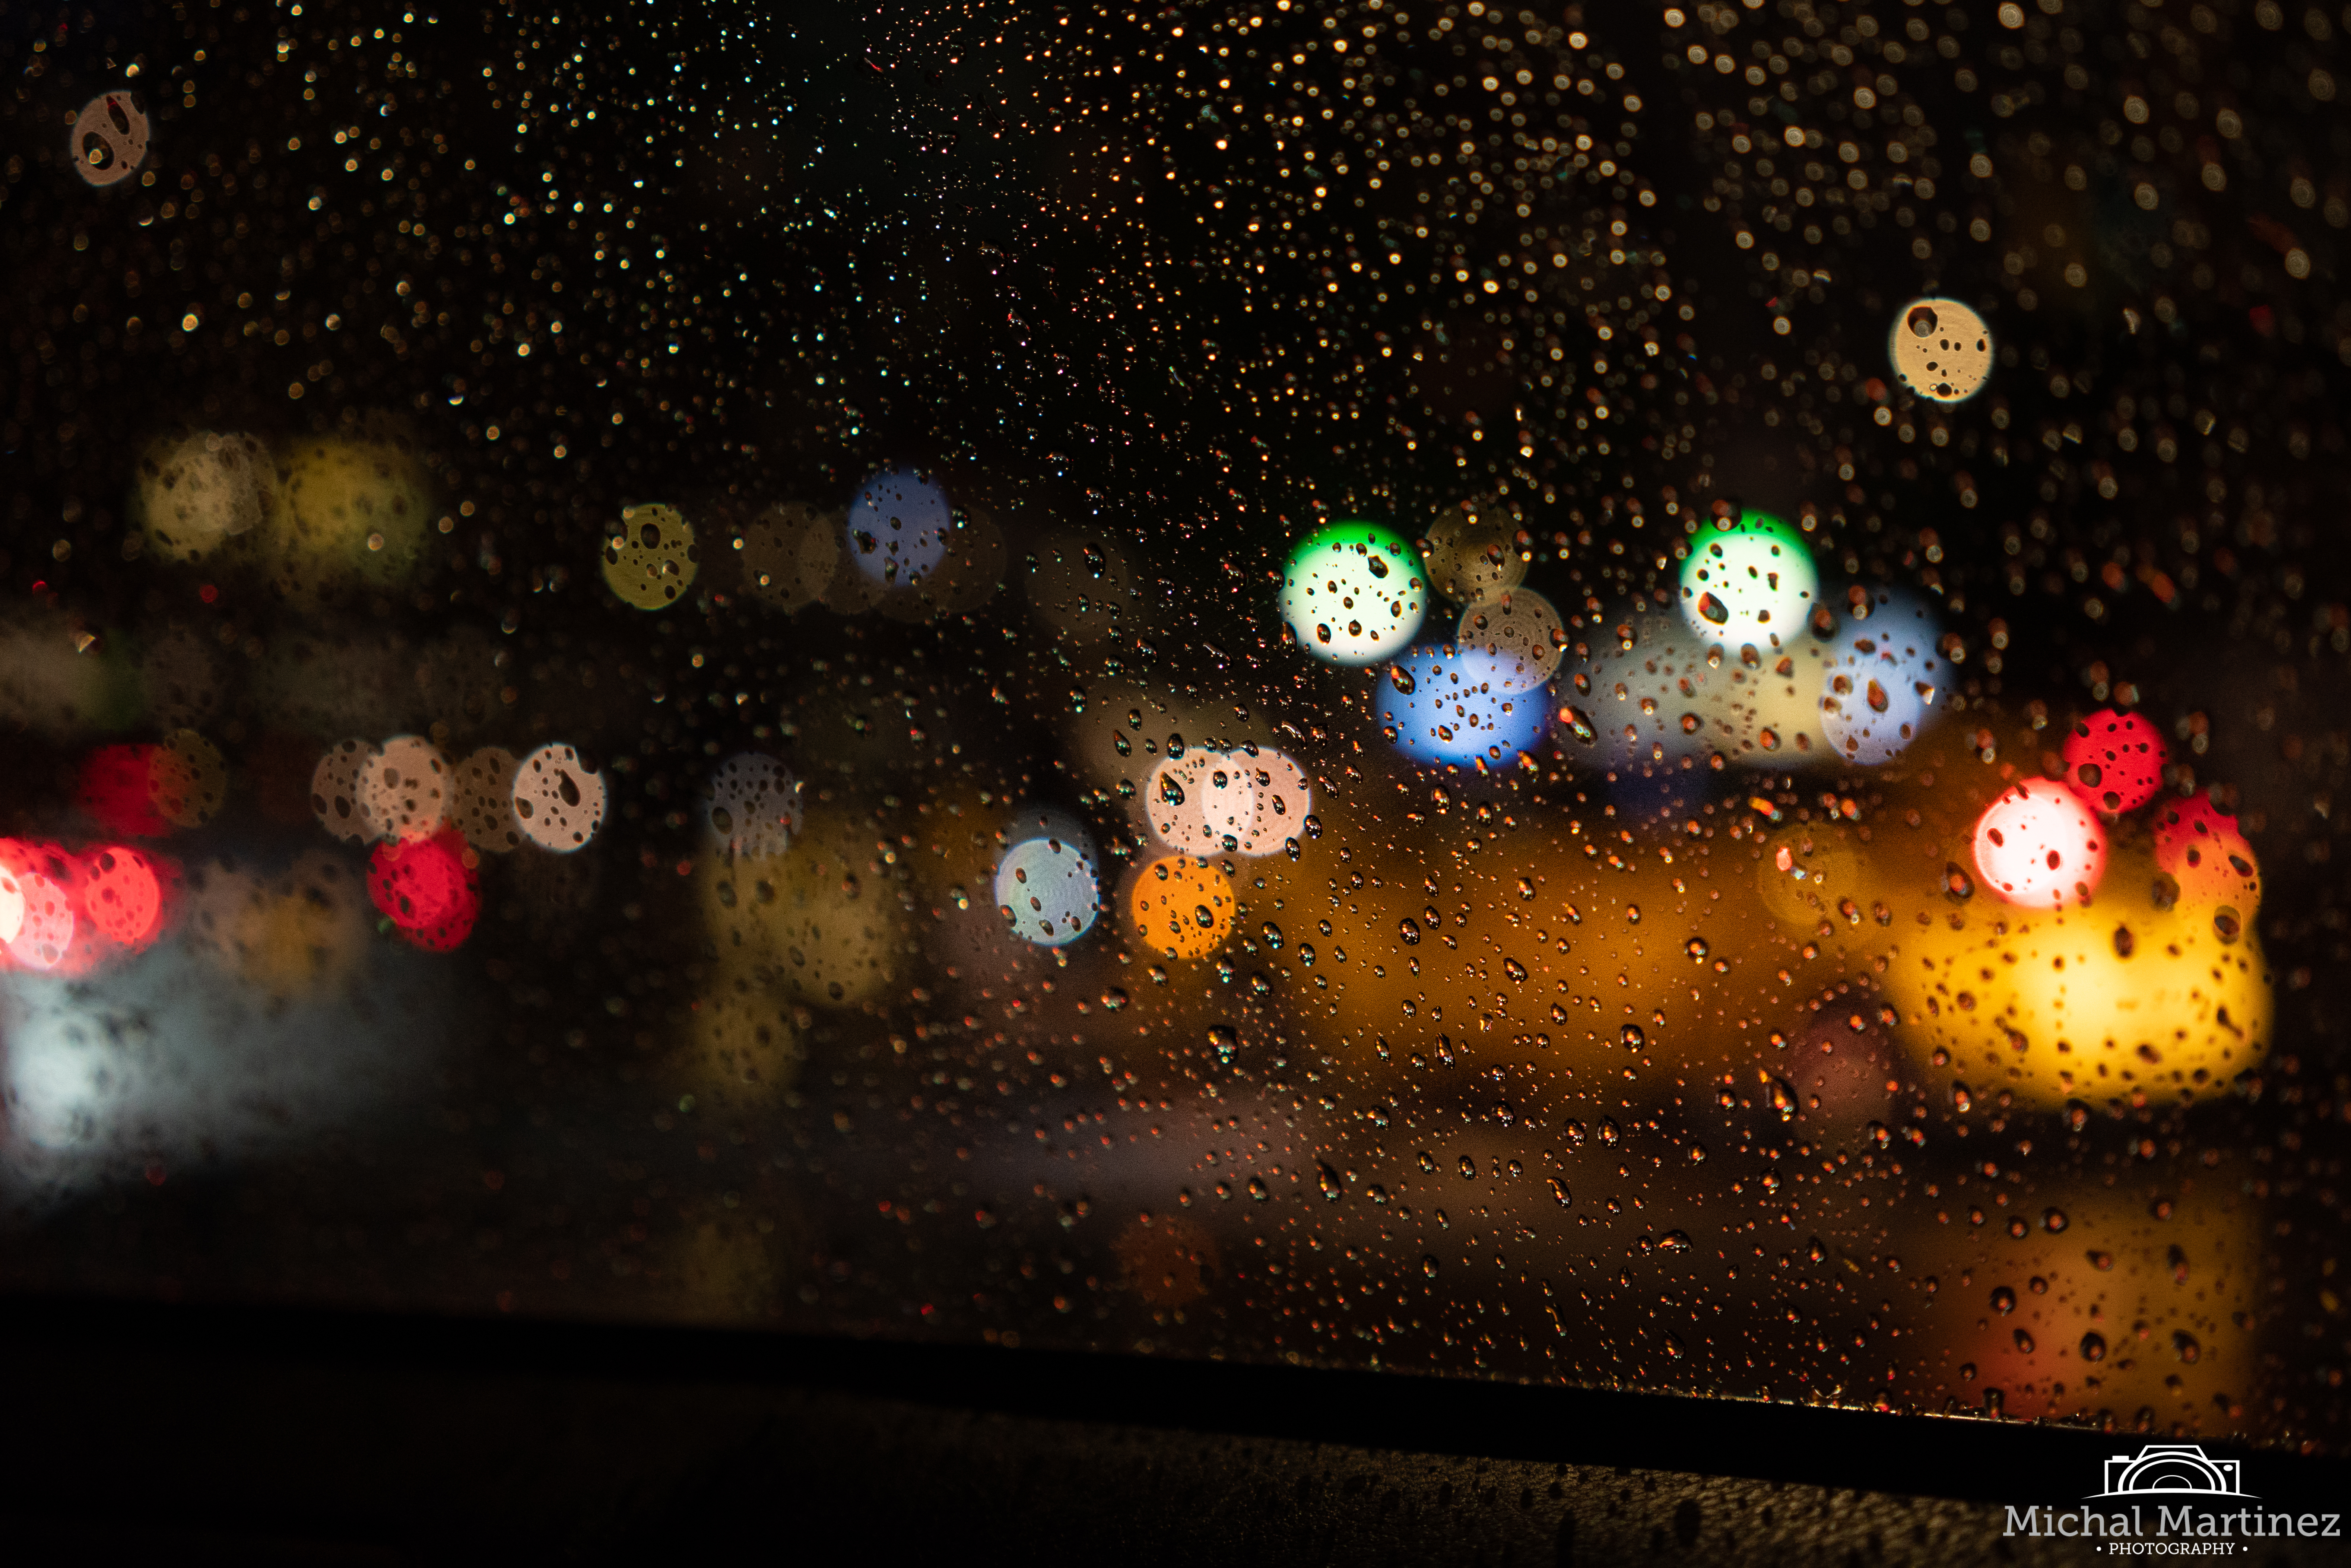 Image of NYC car and car lights through rainy car window